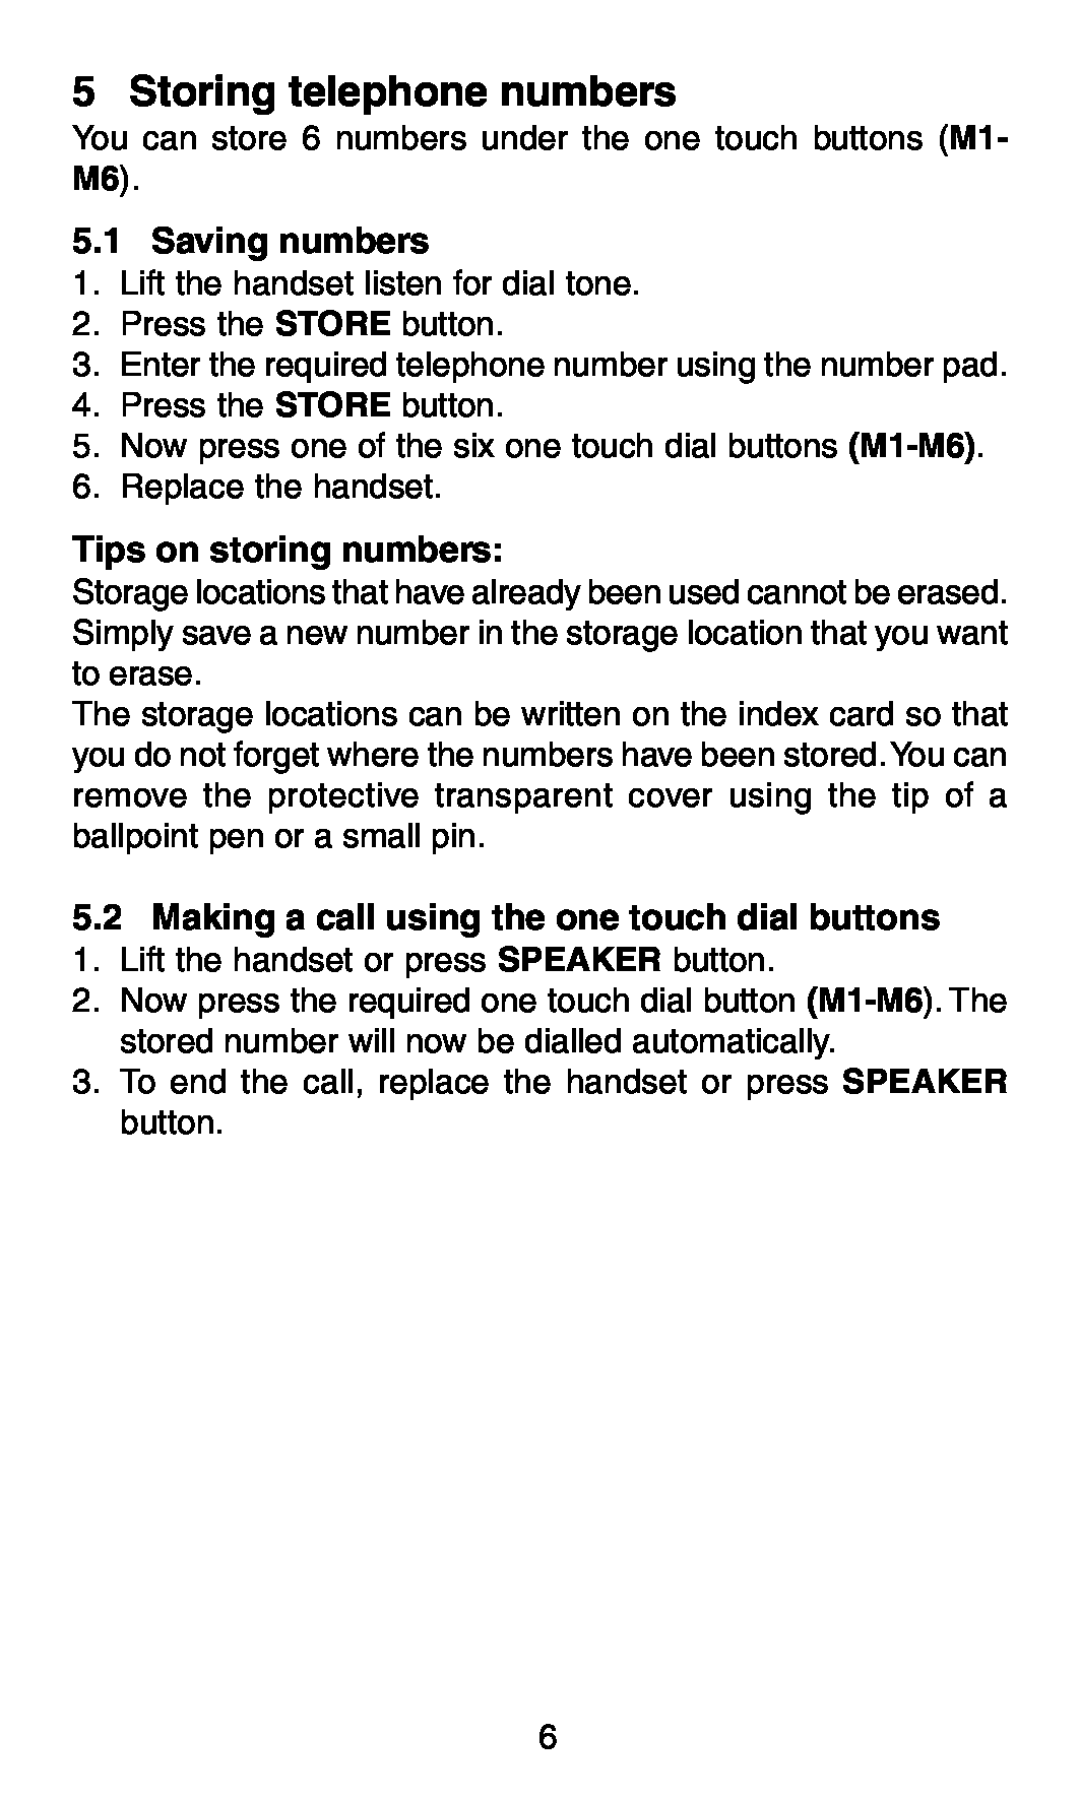 Oricom TP58 manual Storing telephone numbers, Saving numbers, Tips on storing numbers 